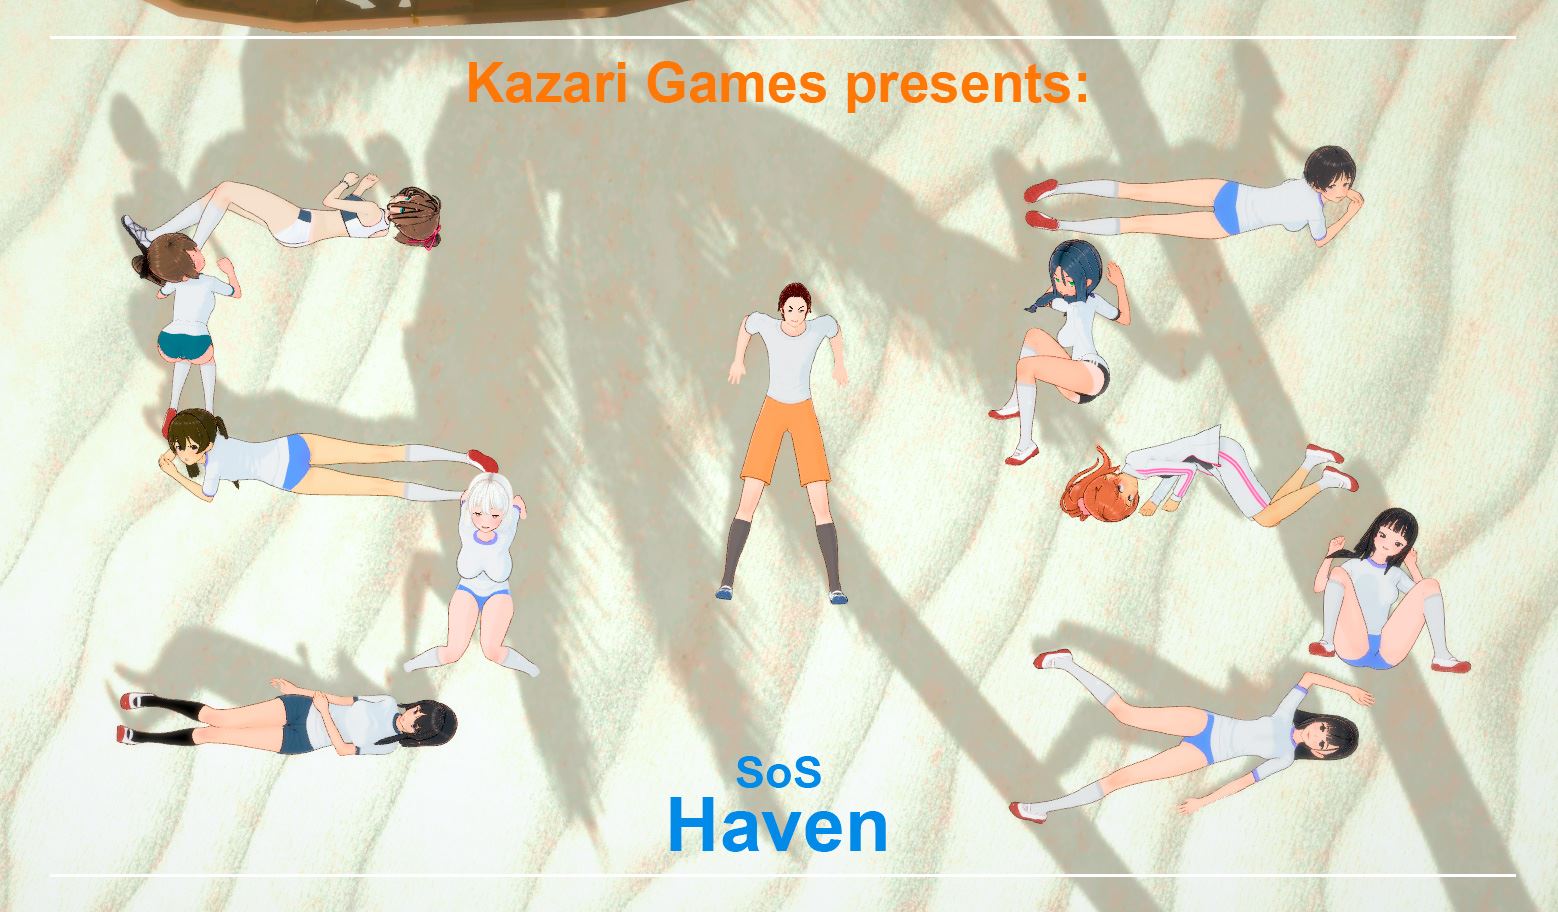 Sos Game Xxx Hd - Ren'py] SoS Haven - vCh.3 by Kazari Games 18+ Adult xxx Porn Game Download